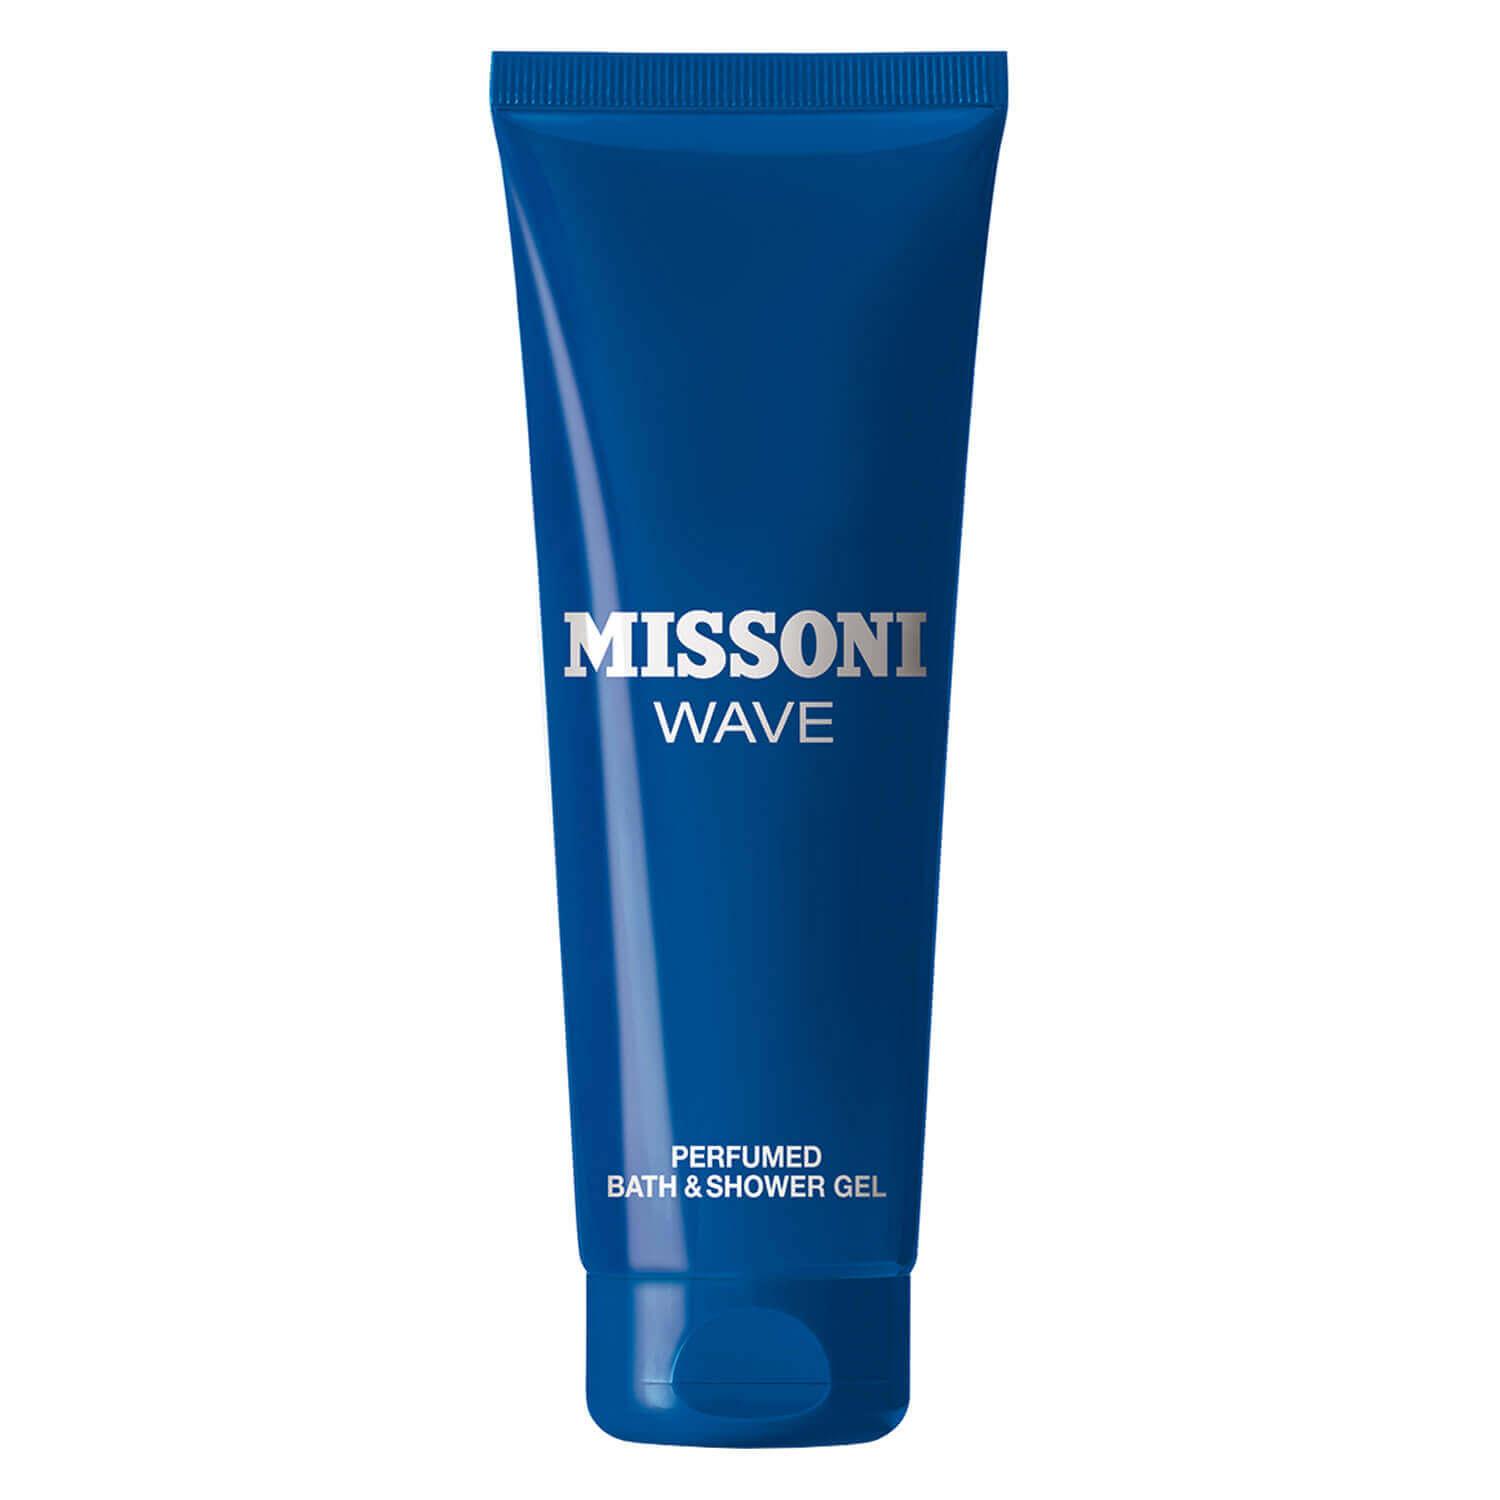 Missoni Wave - Perfumed Bath & Shower Gel